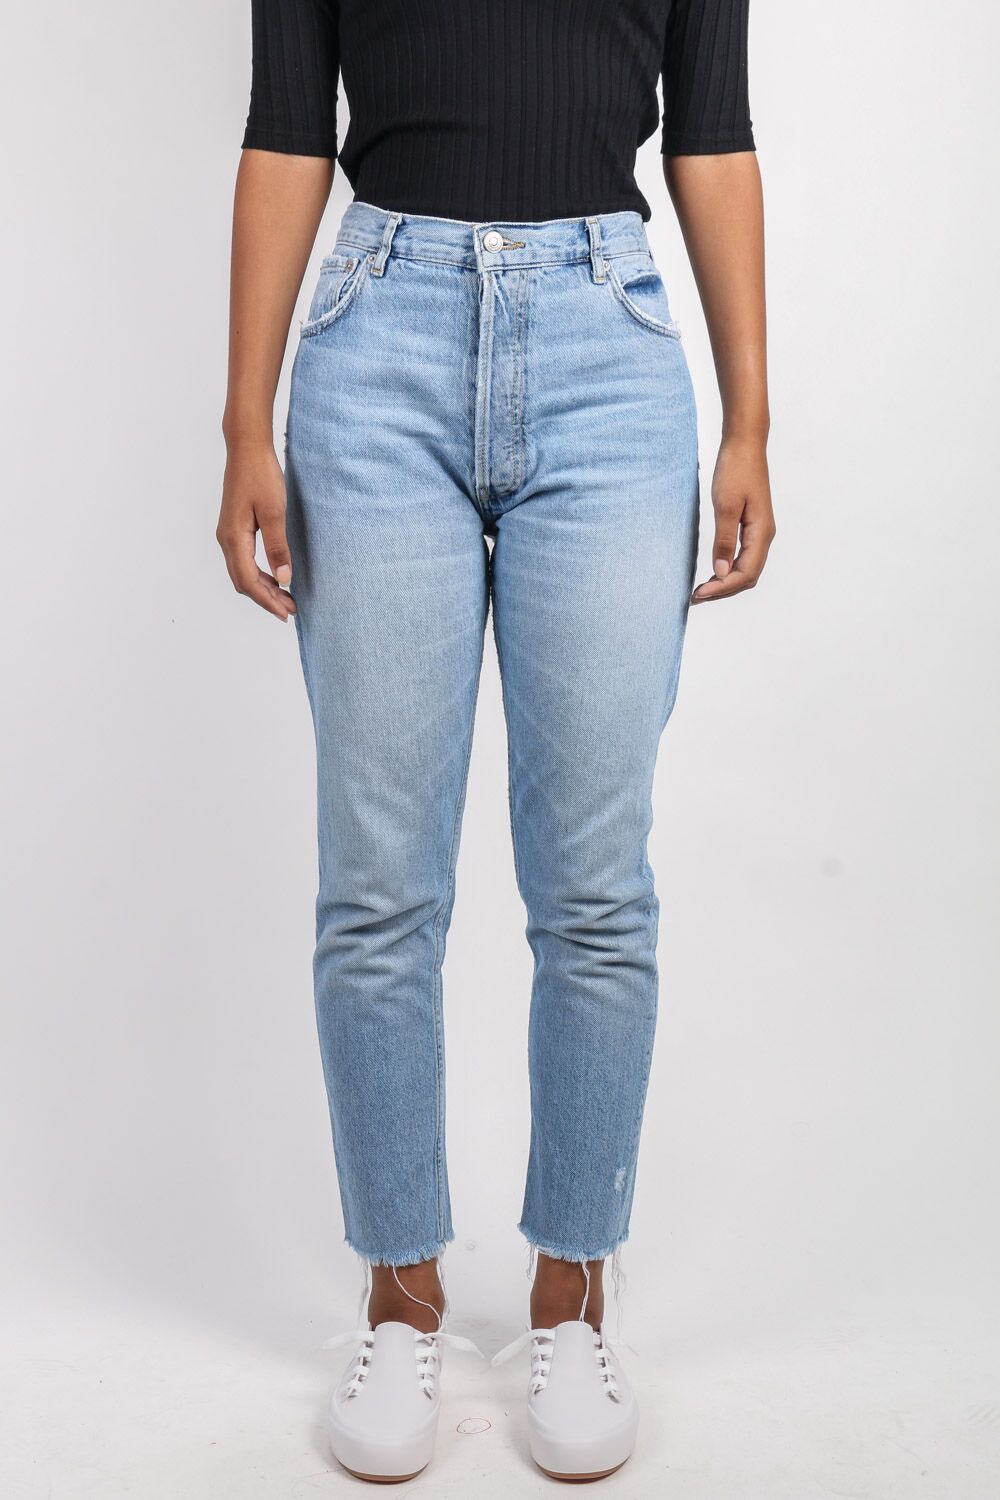 Garimpário Brechó Online - Calça Jeans Zara